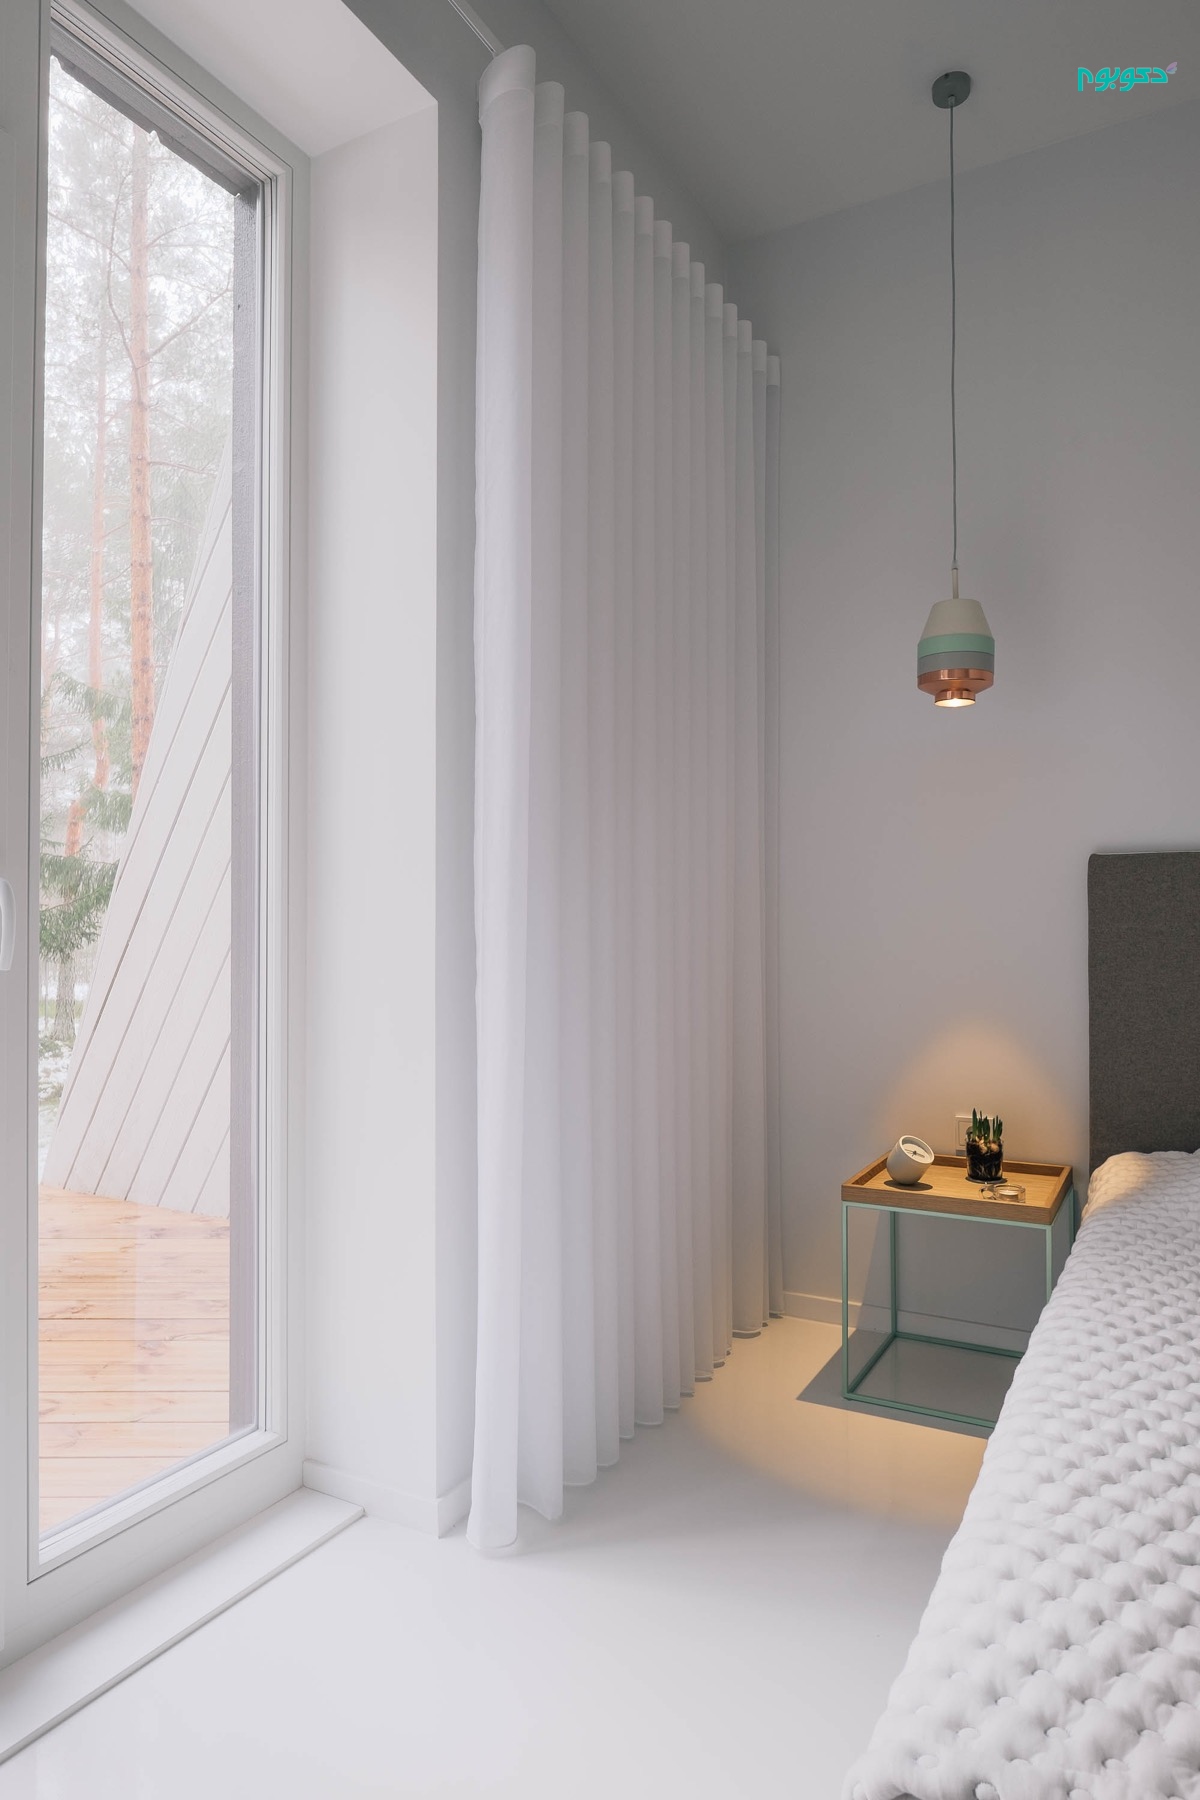 Bedroom-pendant-light-1.jpg